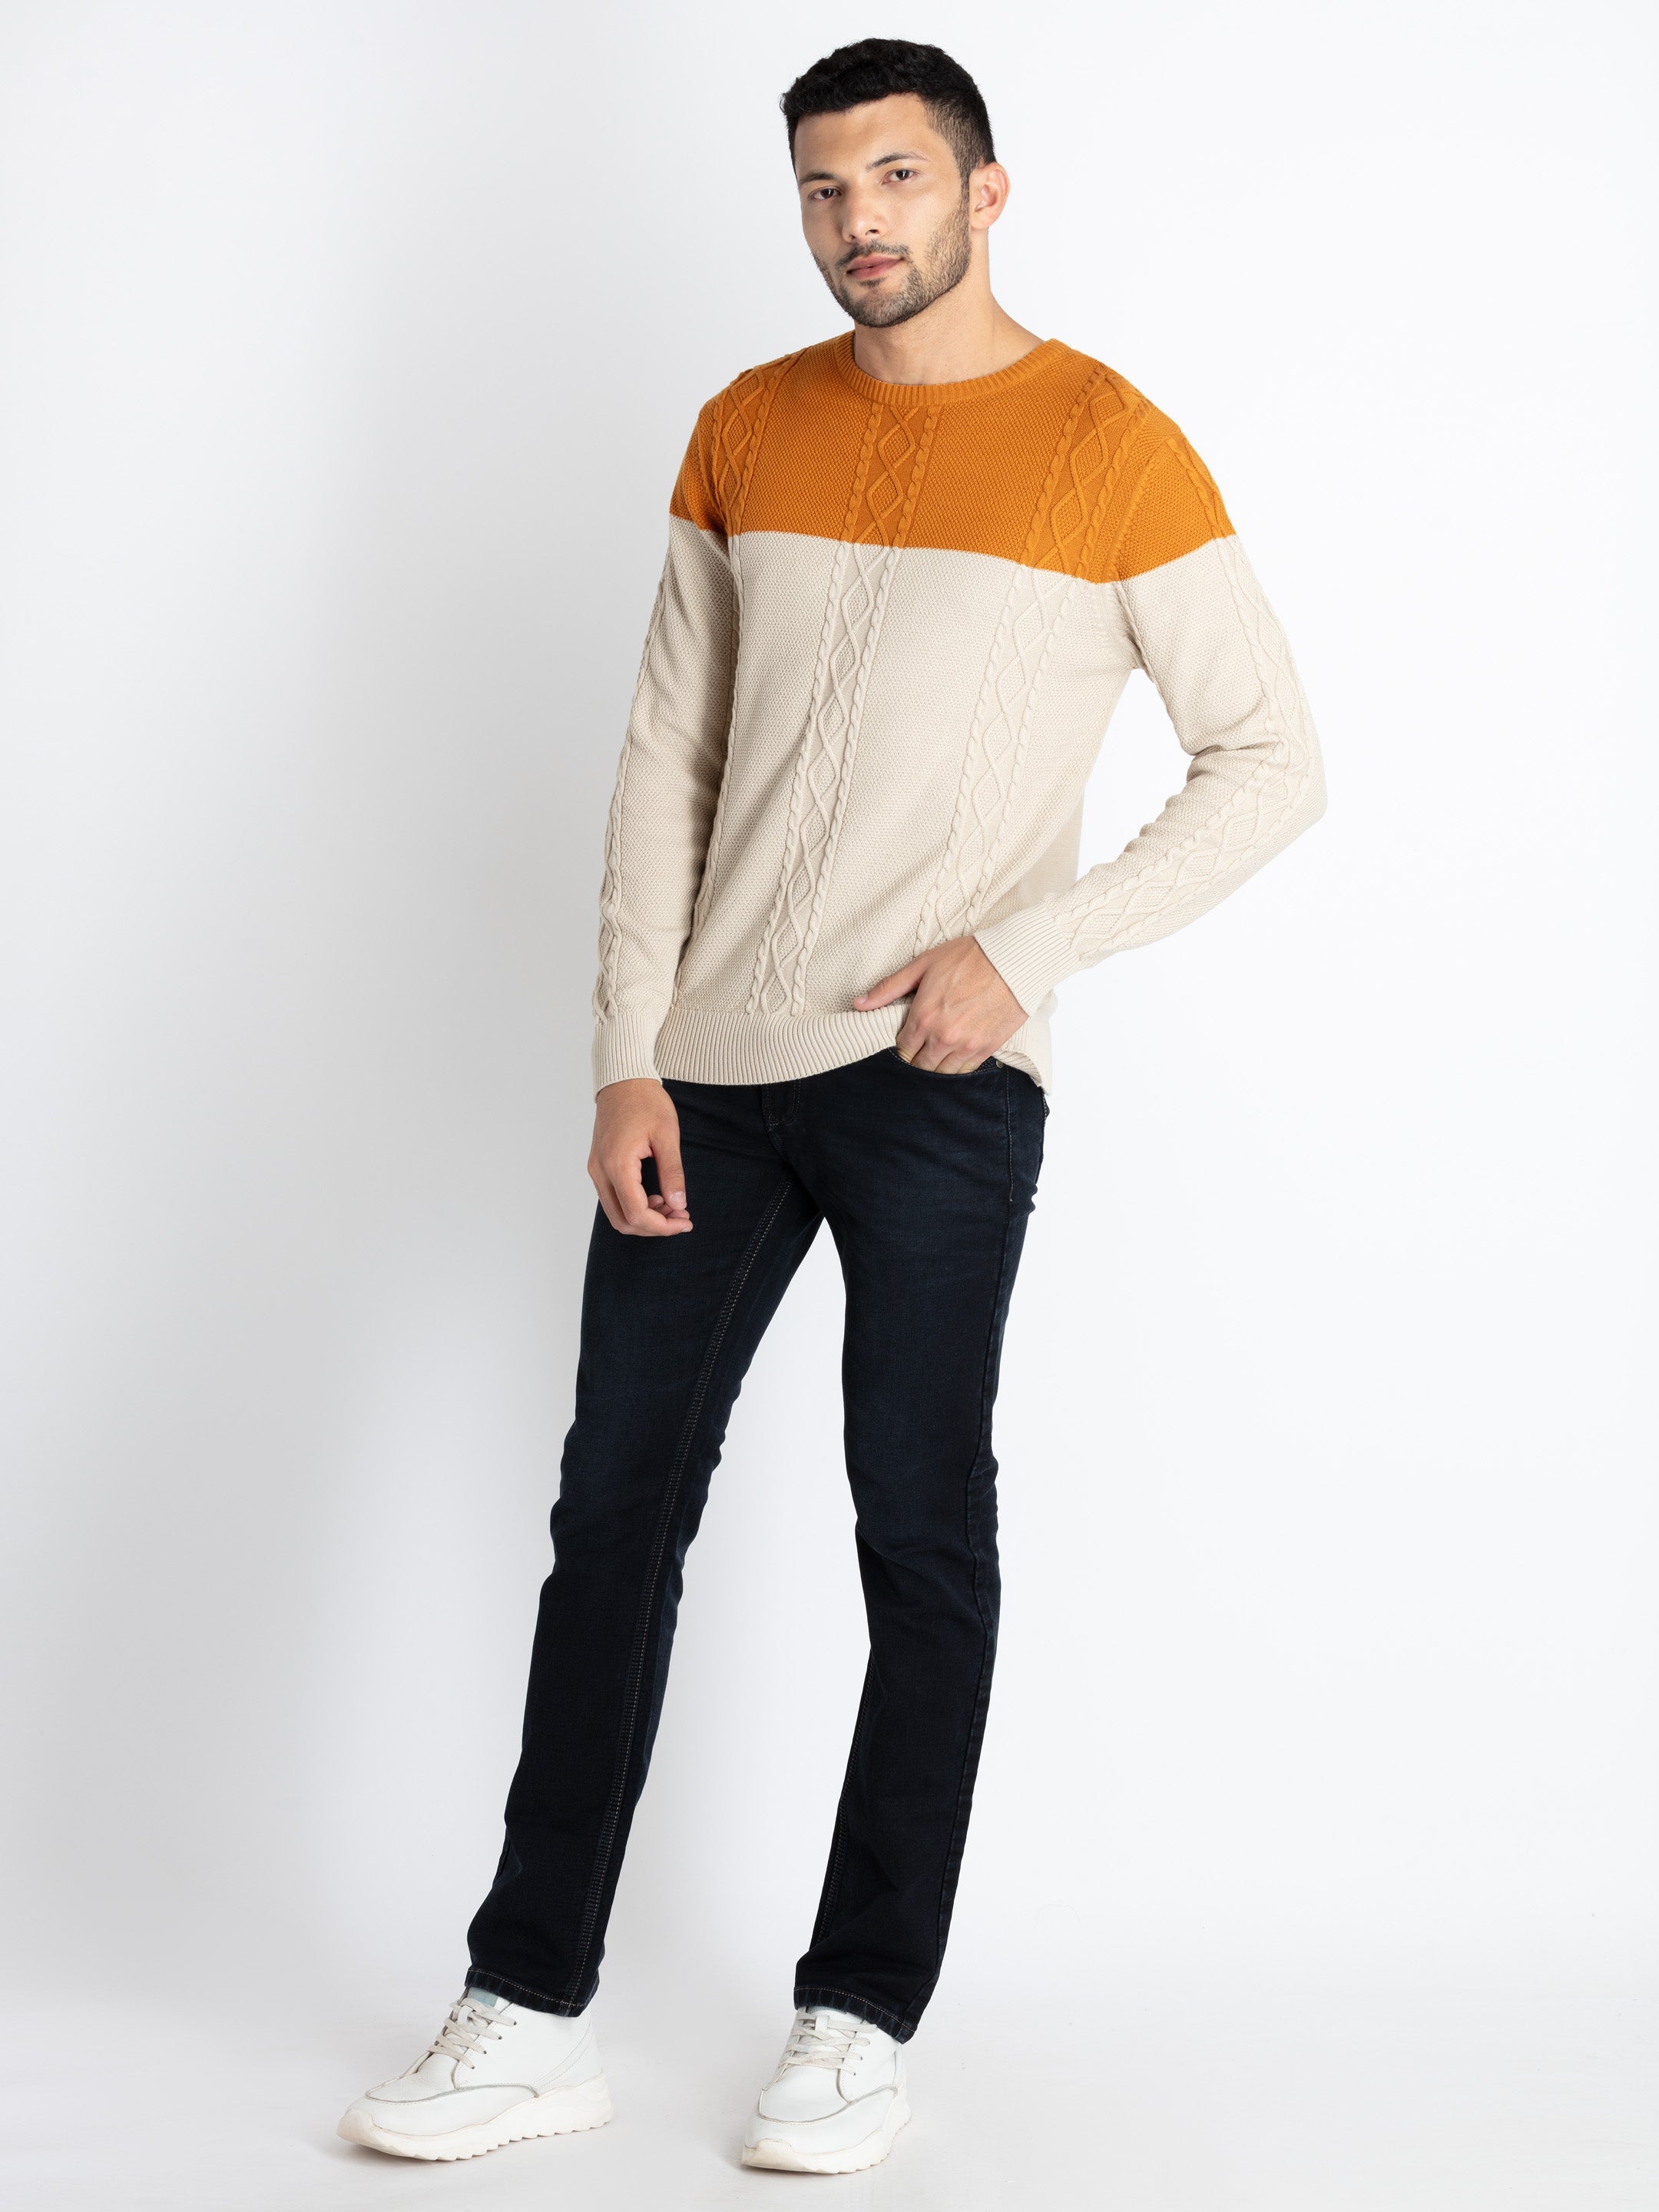 printed sweaters